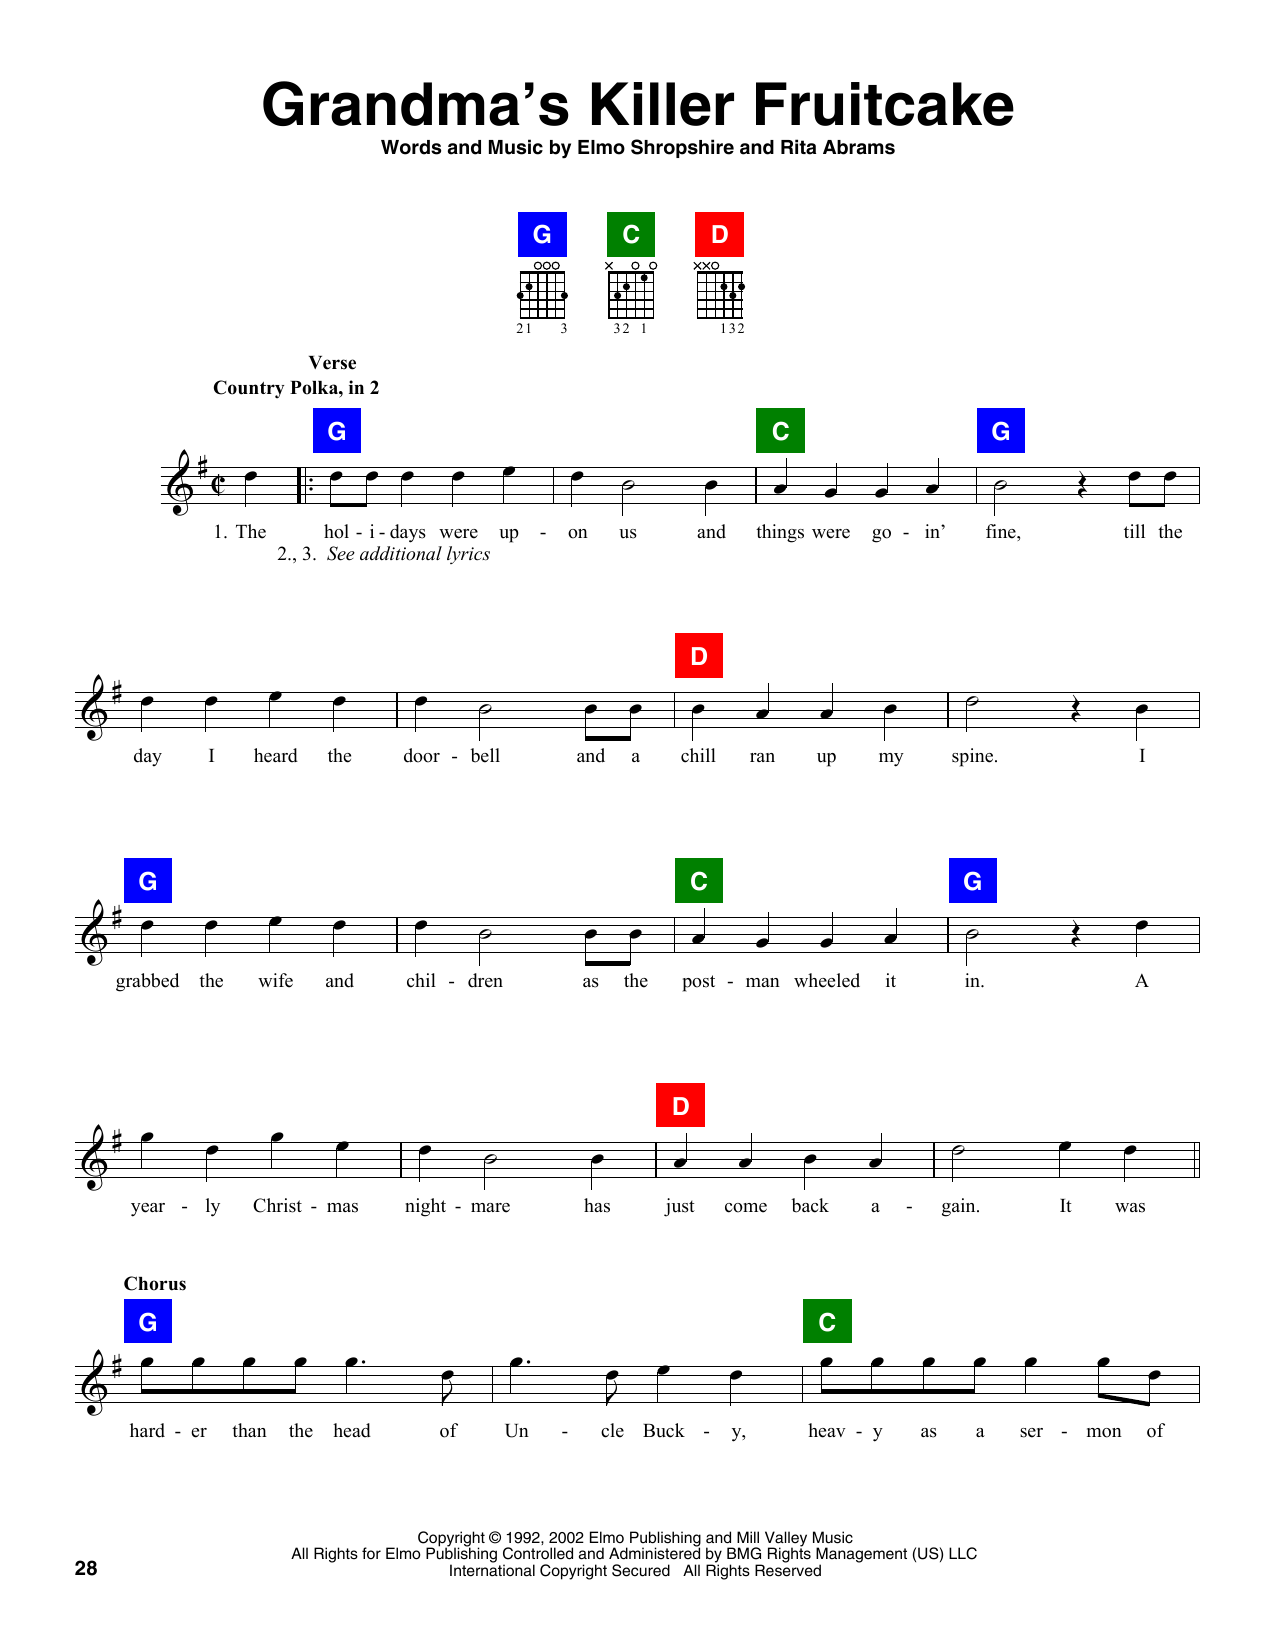 Elmo Shropshire Grandma's Killer Fruitcake Sheet Music Notes & Chords for Cello - Download or Print PDF